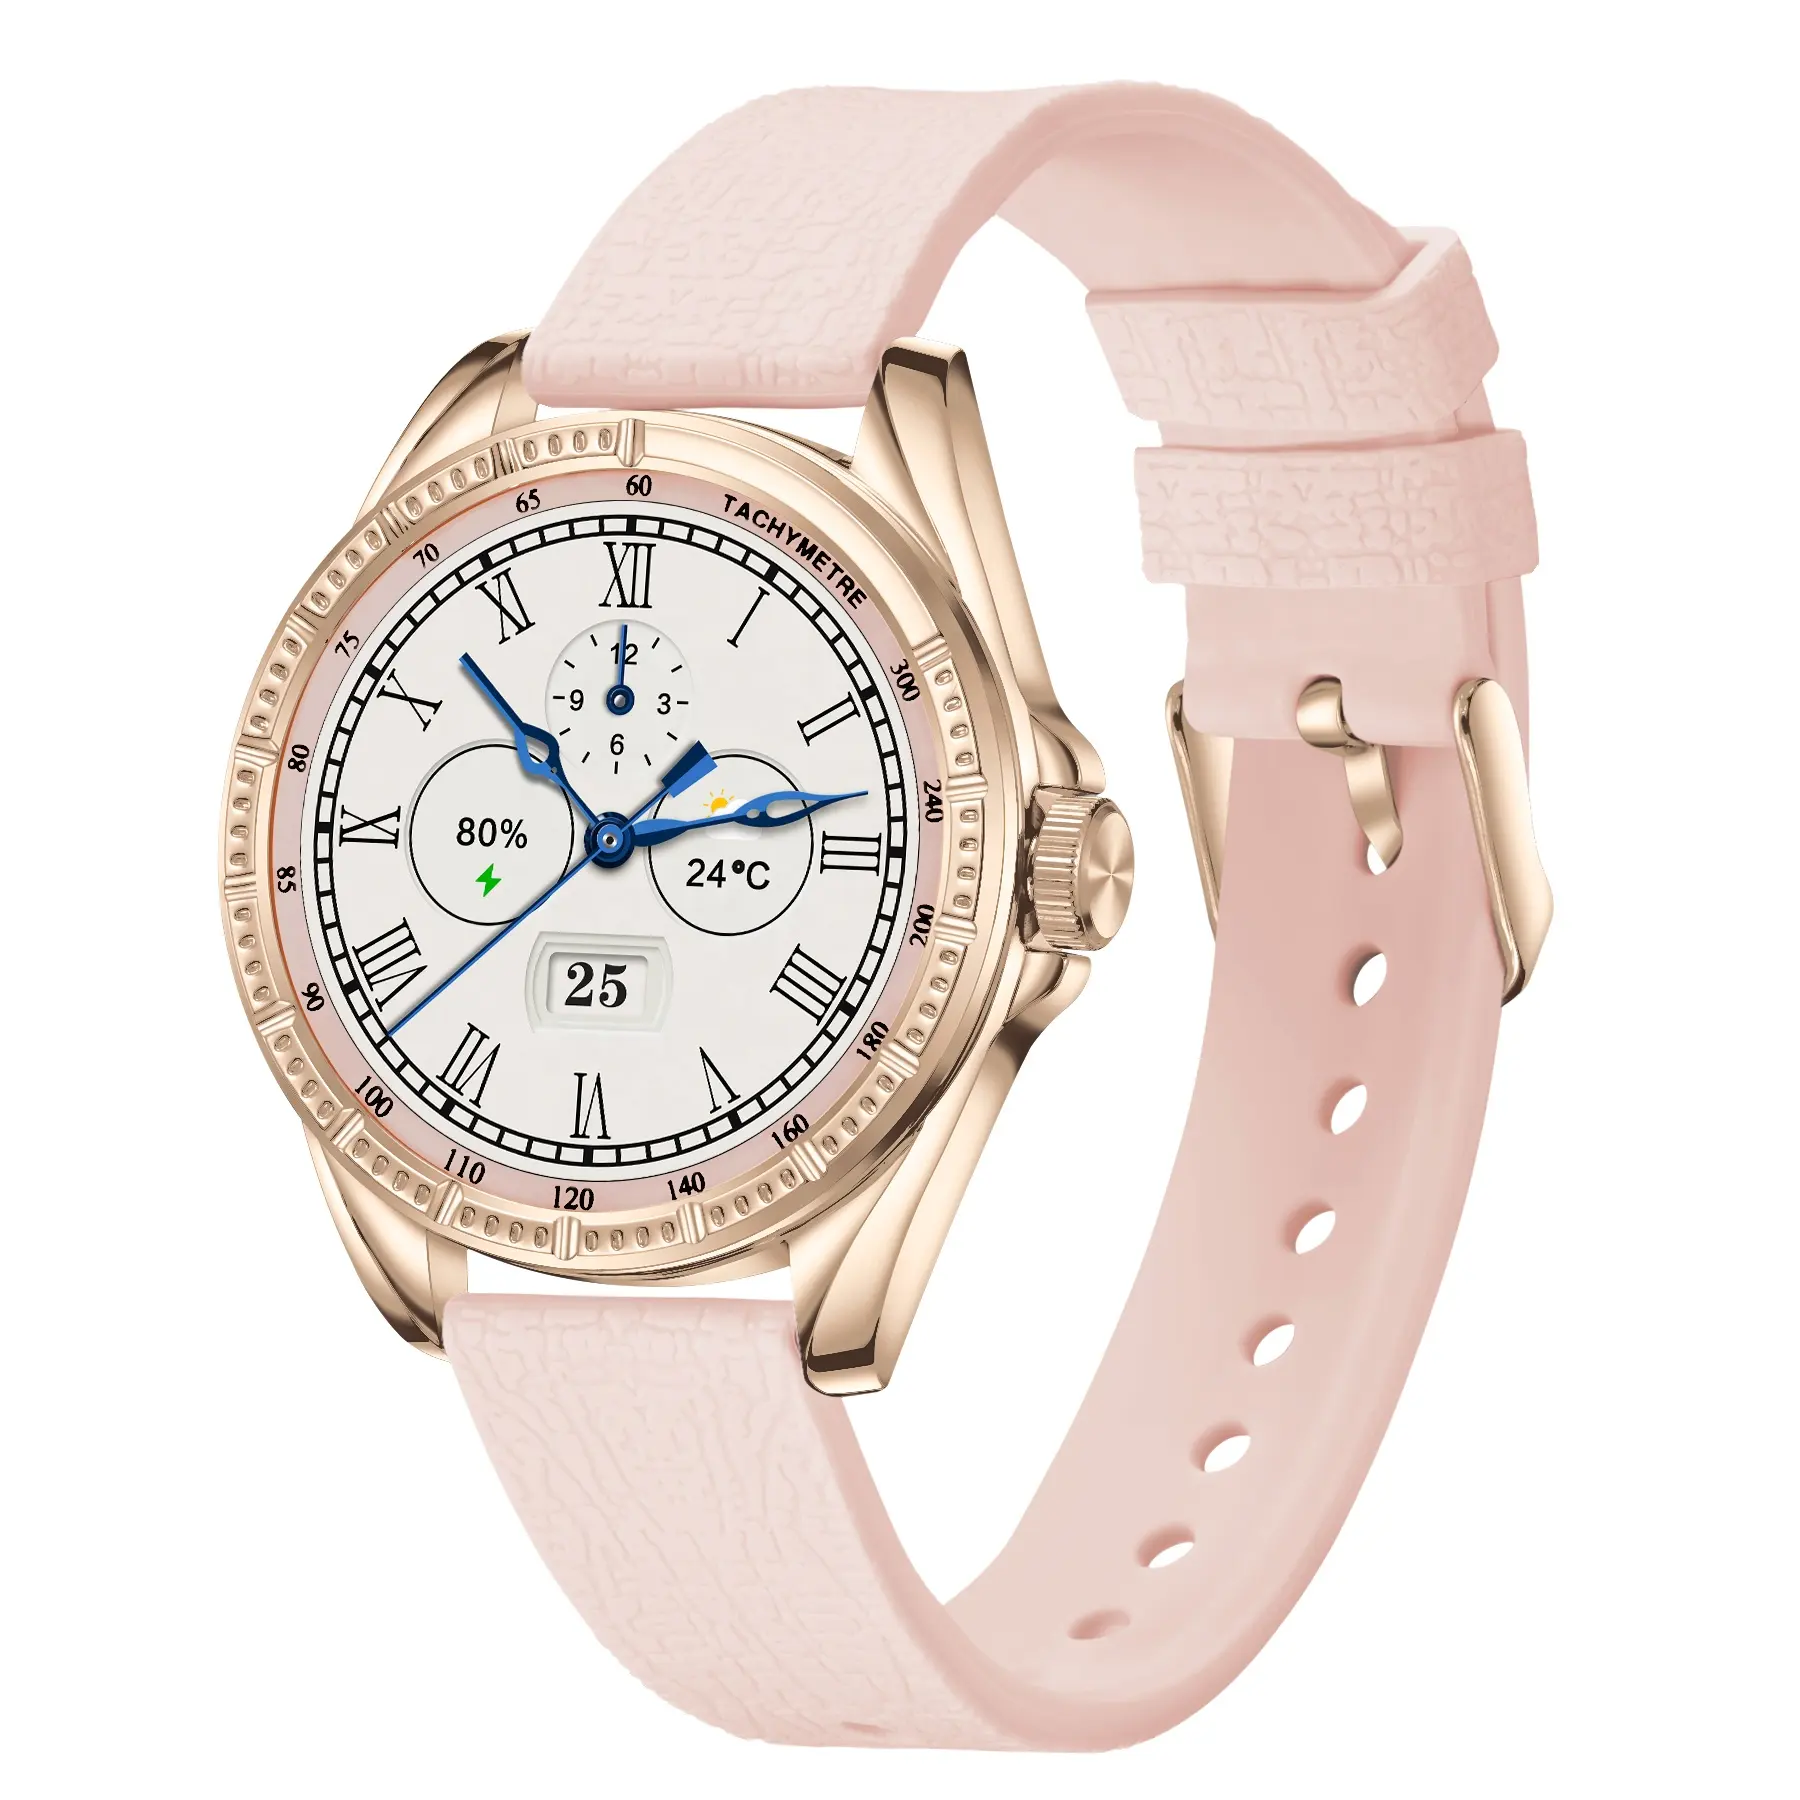 LC603 שעונים חכמים עמידים למים באיכות גבוהה שעונים אינטליגנטיים שעוני יד לנשים מעקב כושר